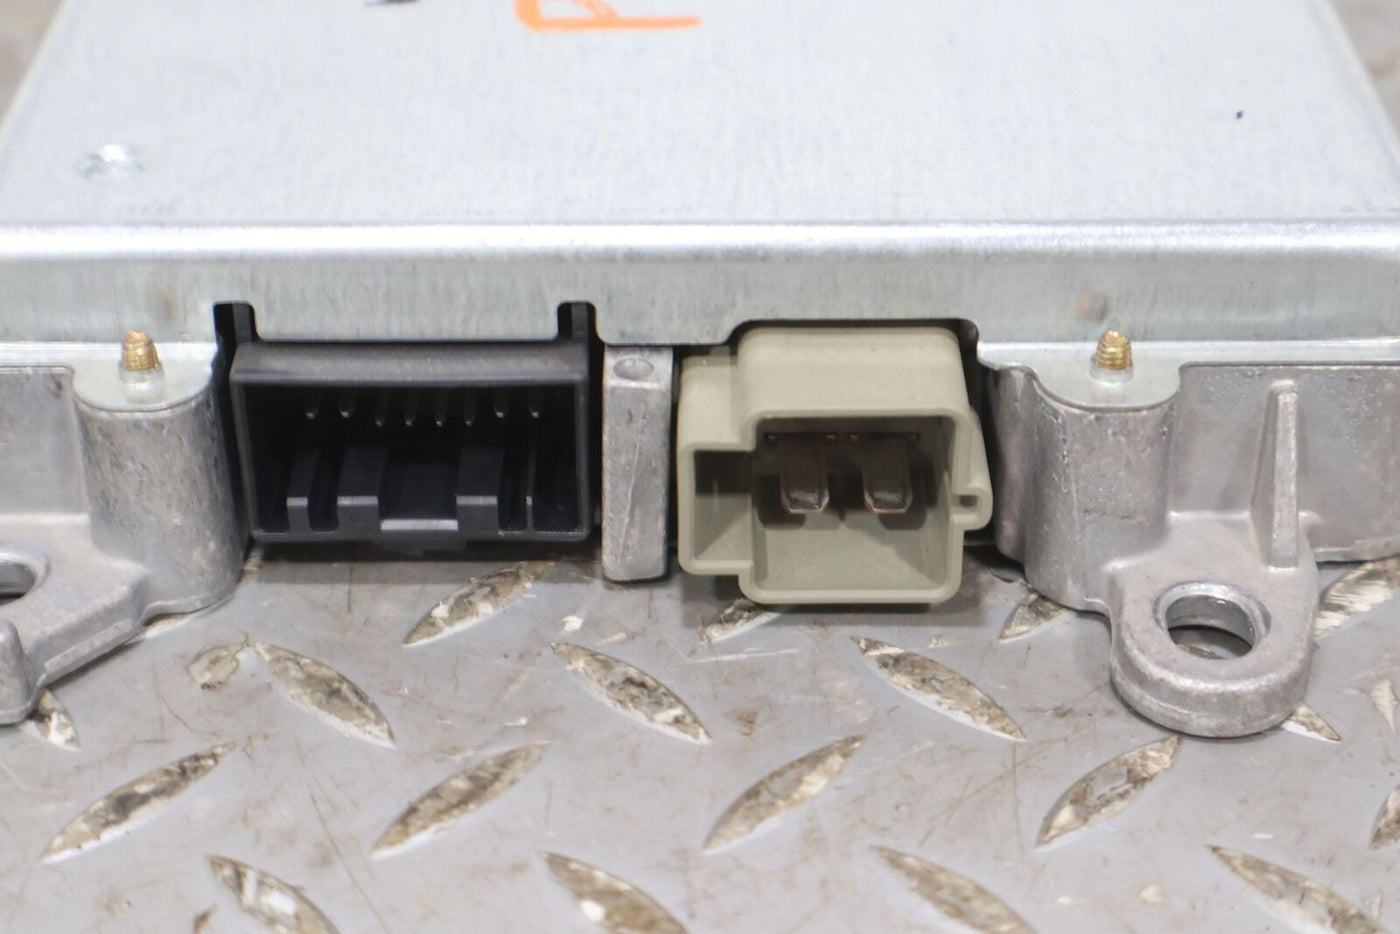 03-05 Ford Thunderbird Rear Electronic Lamp Light Control Module 3W6T-13B524-AA